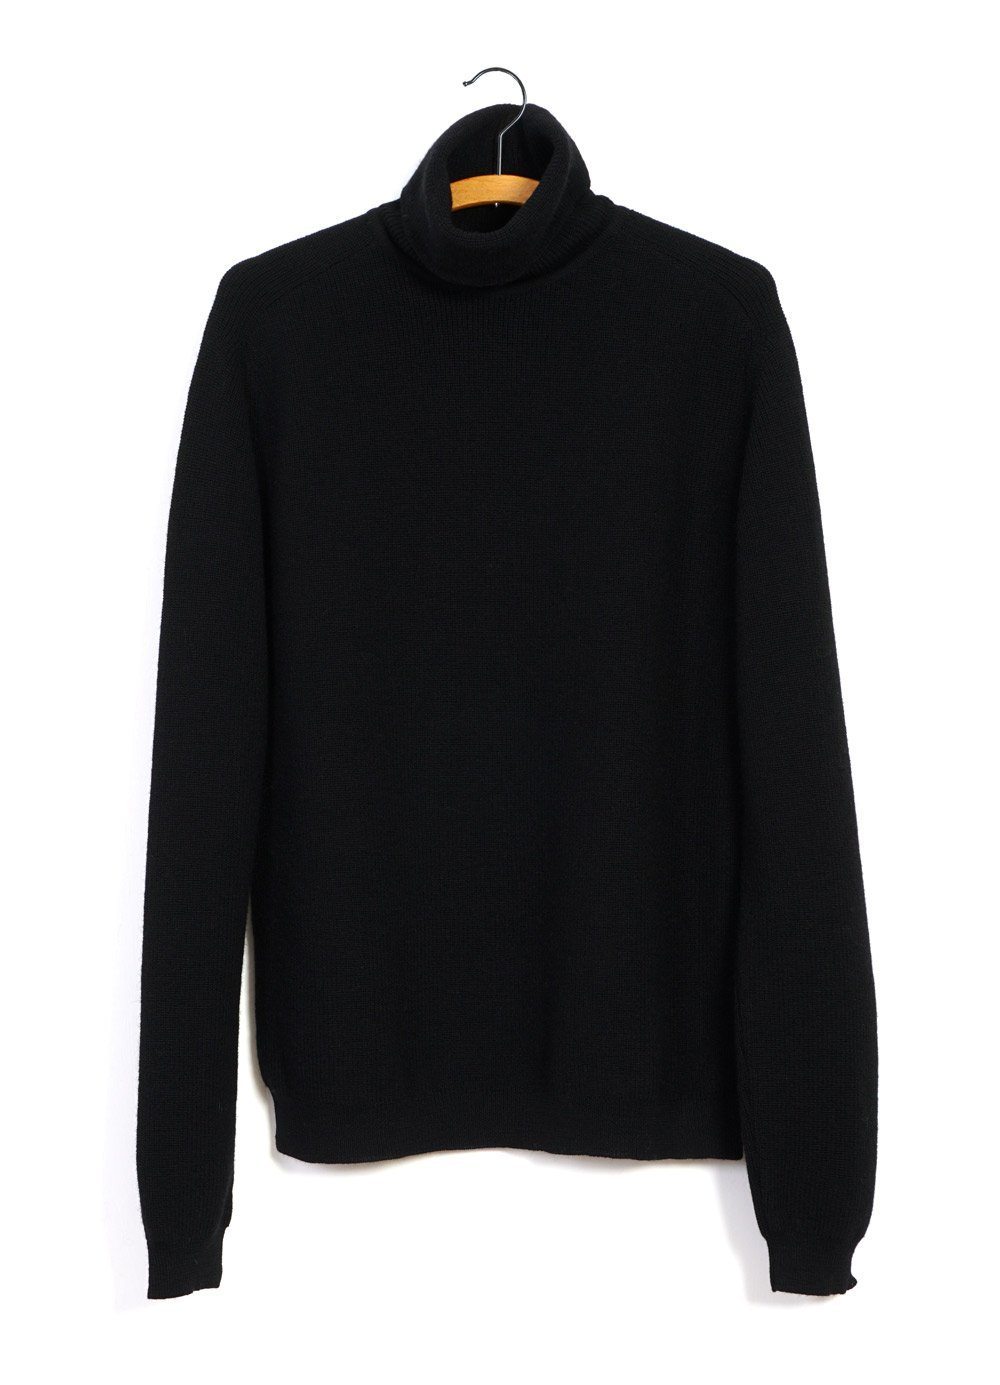 HANSEN Garments - PATRICK | Knitted Turtleneck Sweater | Black - HANSEN Garments